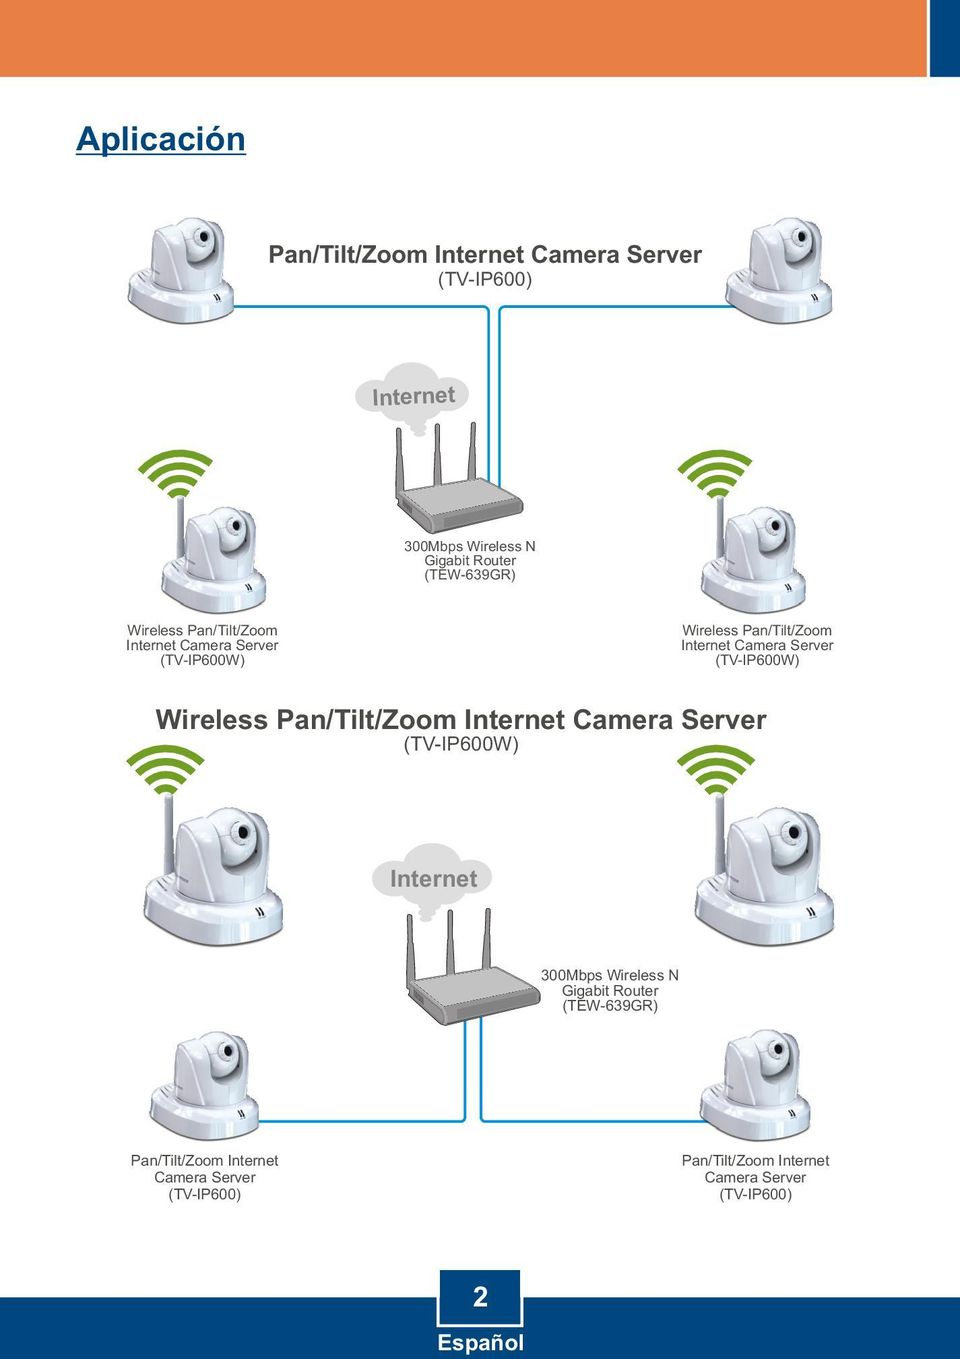 Server (TV-IP600W) Wireless Pan/Tilt/Zoom Internet Camera Server (TV-IP600W) Internet 300Mbps Wireless N